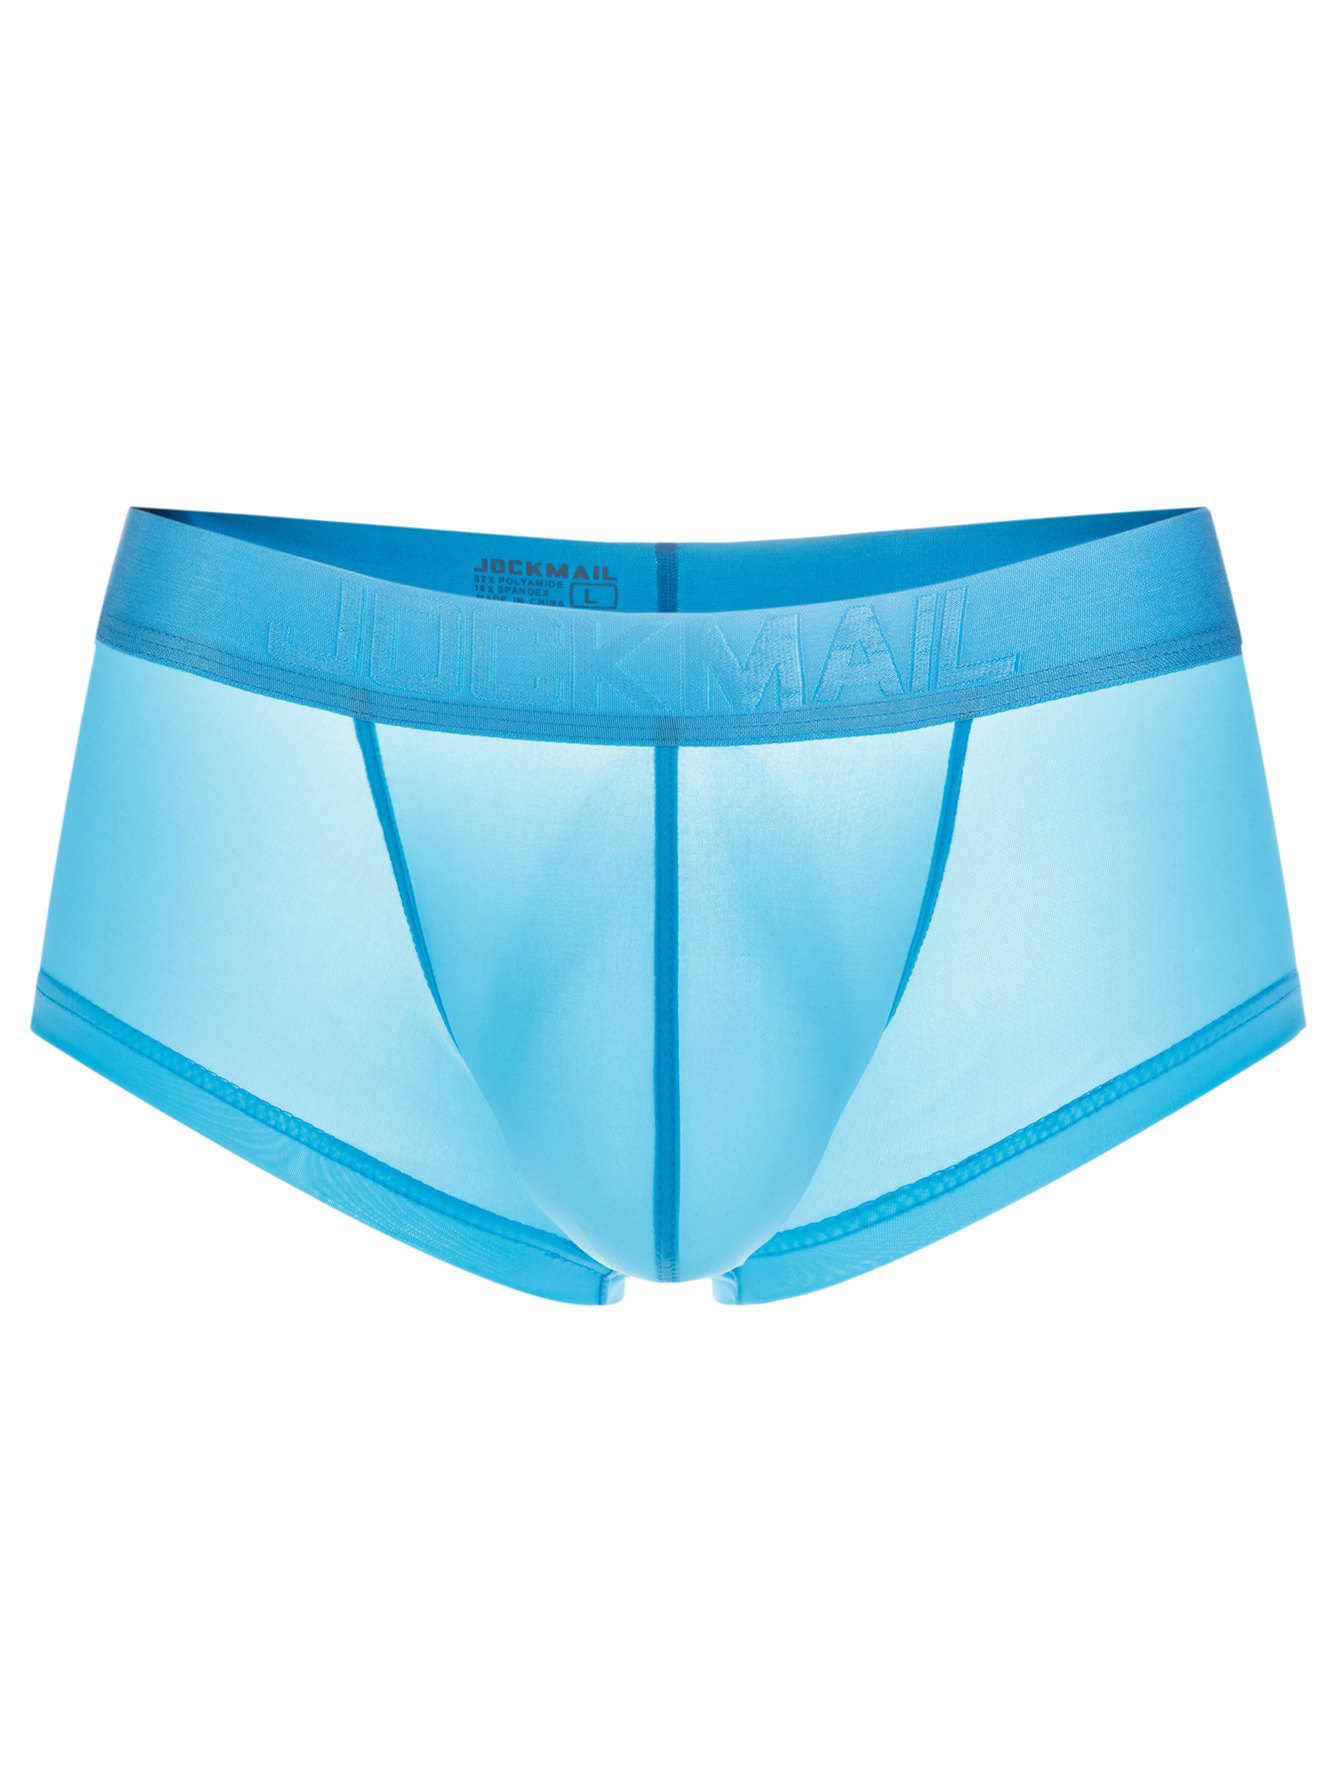 Men's Underwear, Jacquard Mesh Hole Semi-transparent Briefs, Sexy  Underpants, Breathable Comfy Stretchy Panties